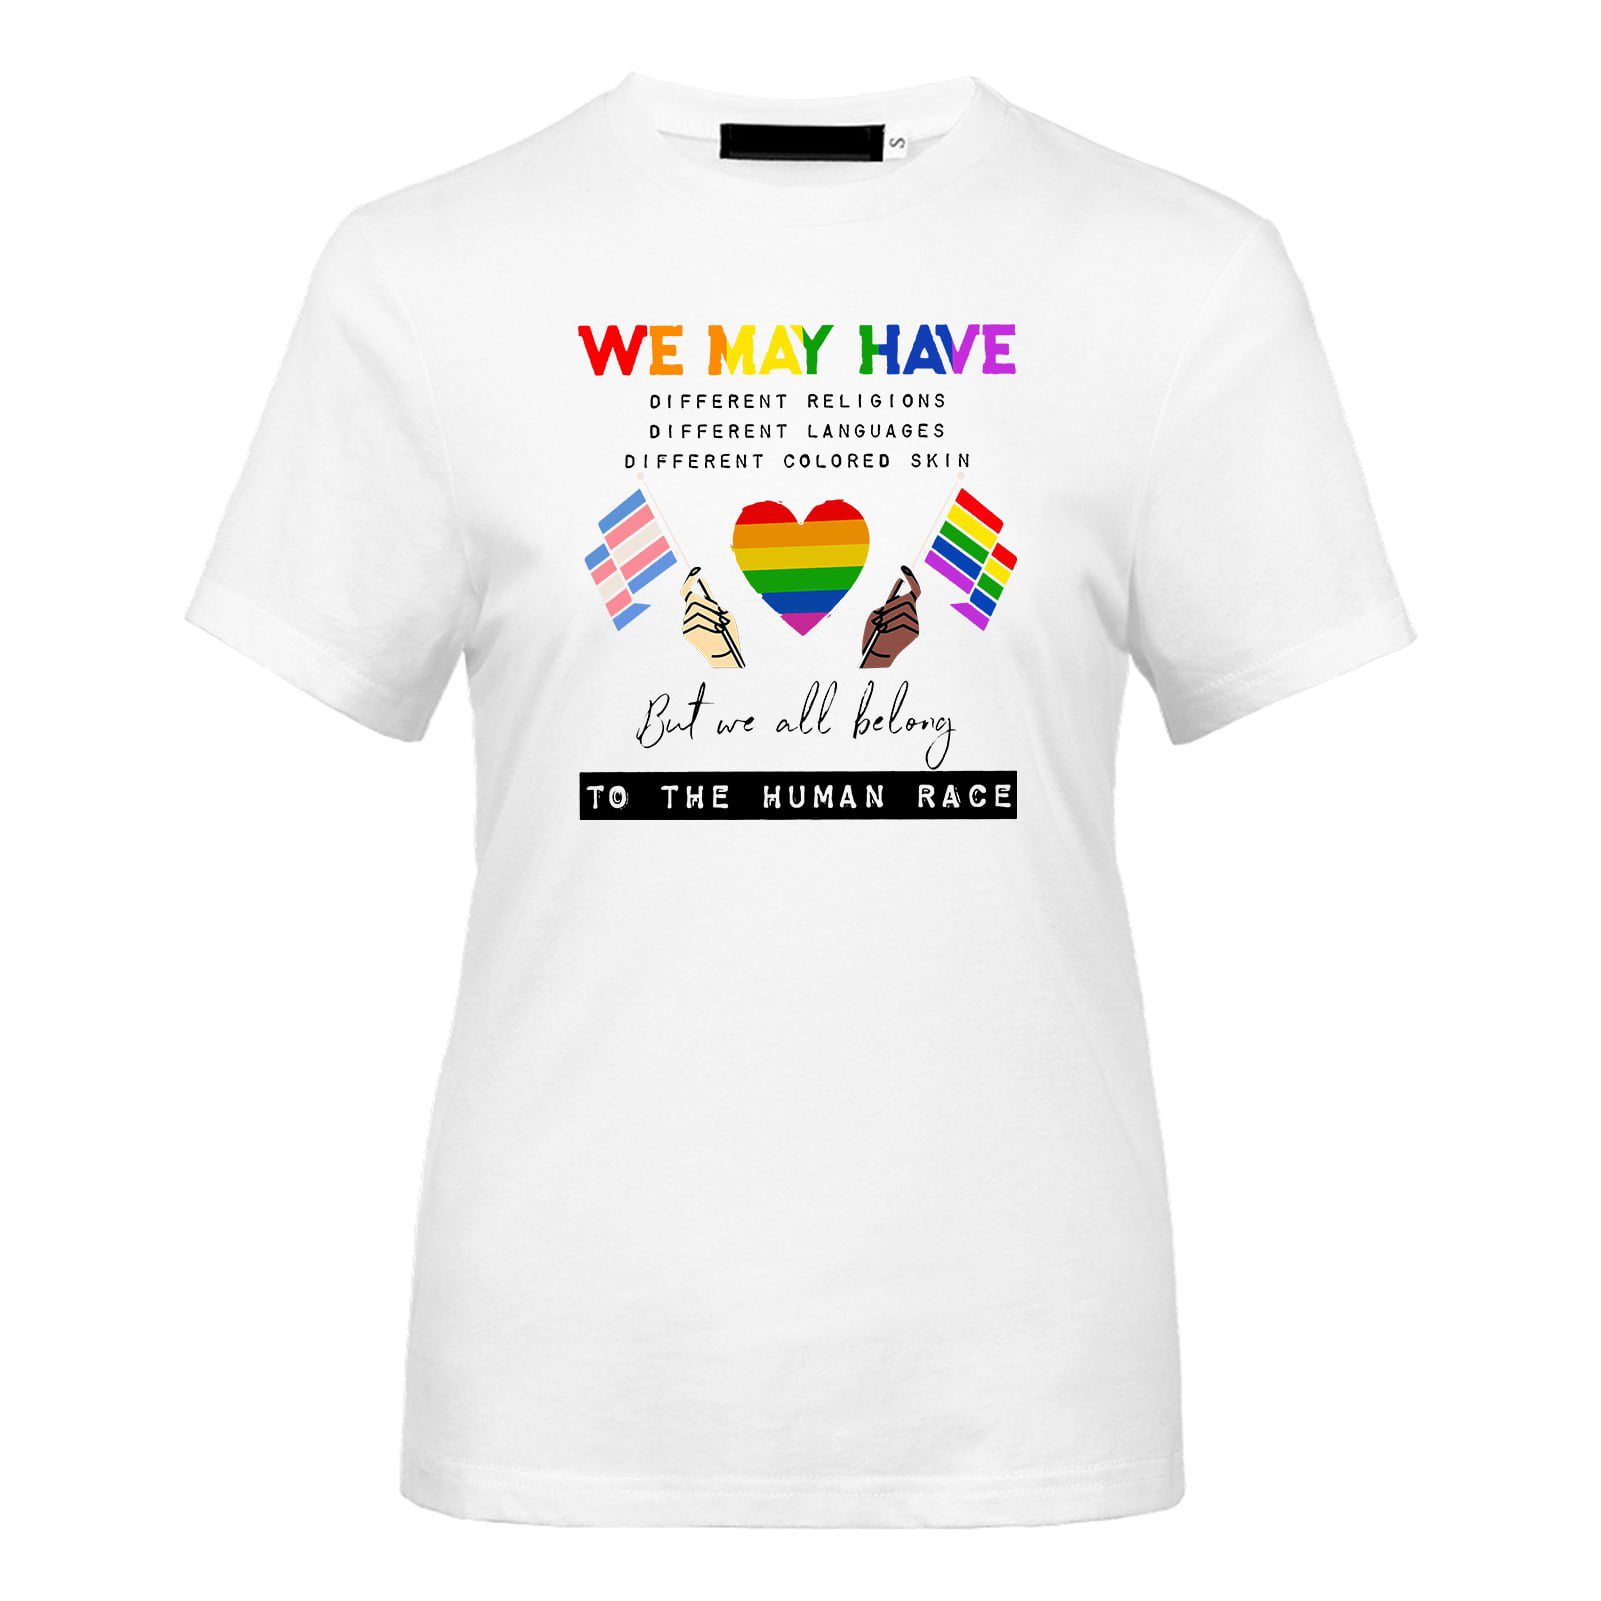 International Pride Love is Love LGBT Gay Pride Short-Sleeve Unisex T-Shirt from